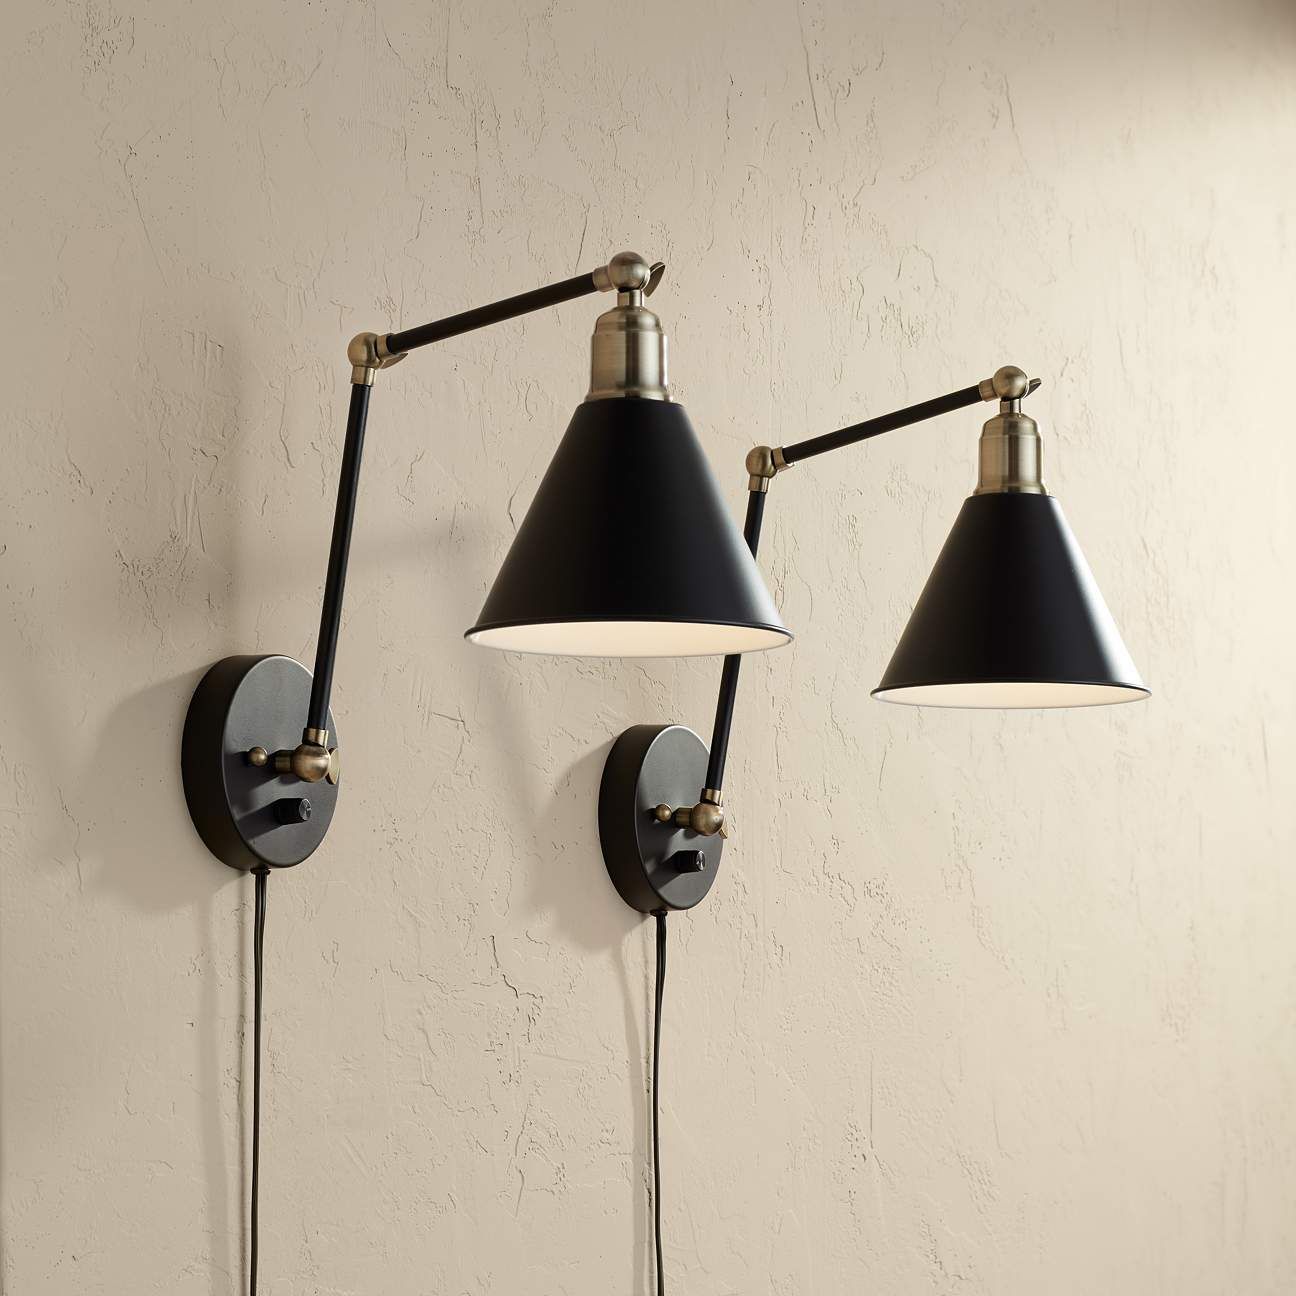 Wray Black and Antique Brass Plug-In Wall Lamp Set of 2 | www.lampsplus.com | LampsPlus.com